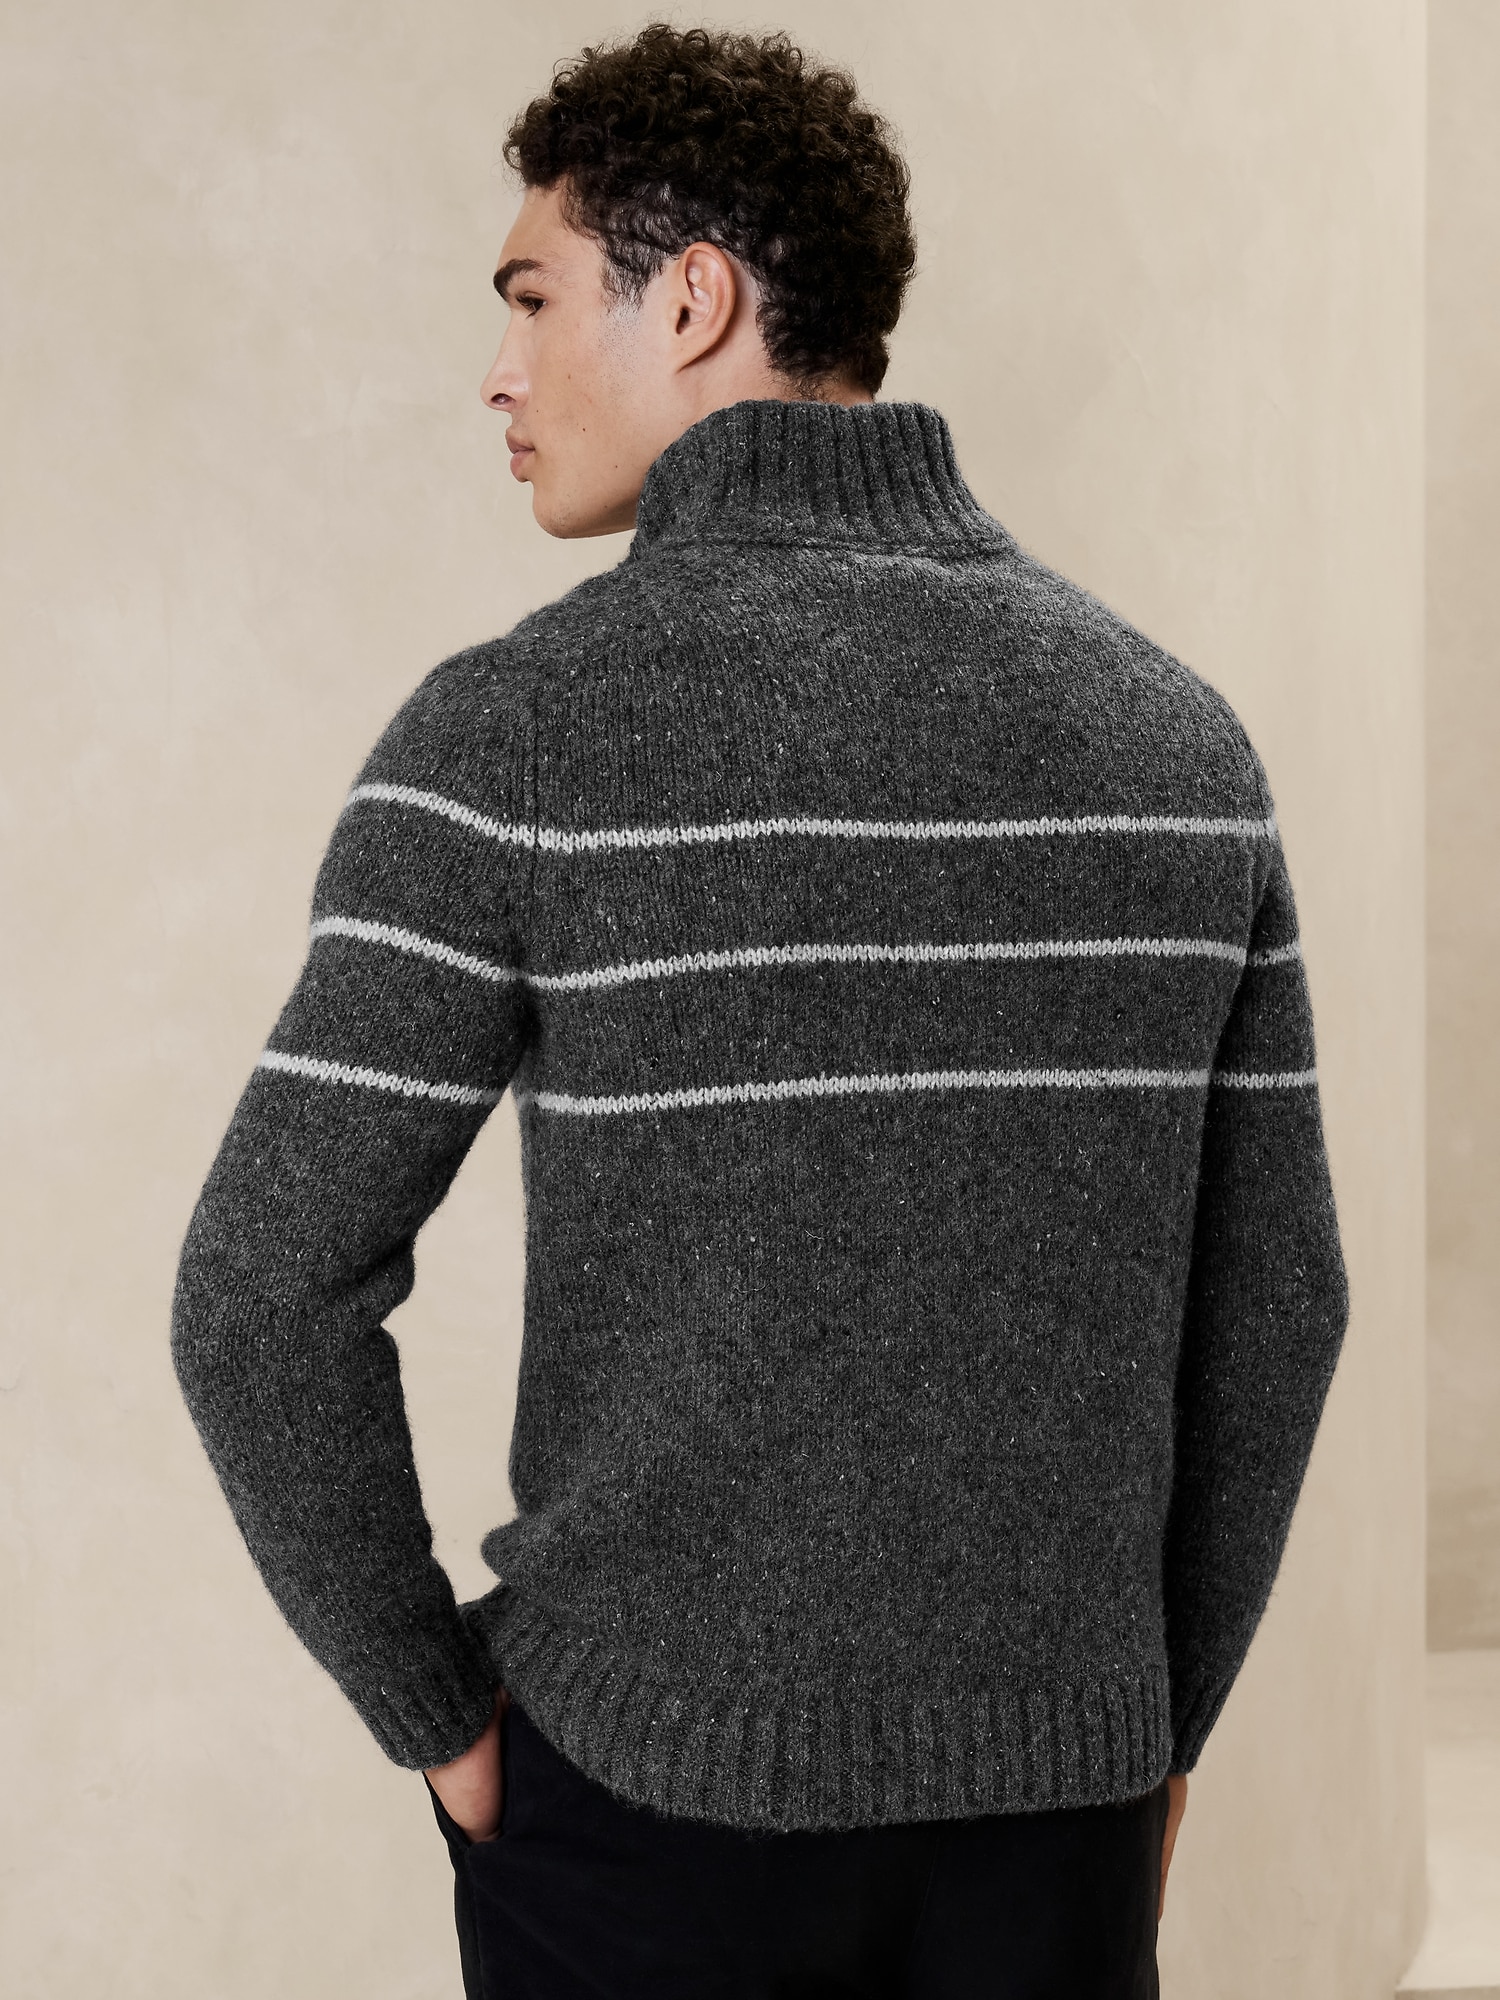 Tweed Striped Sweater | Banana Republic Factory